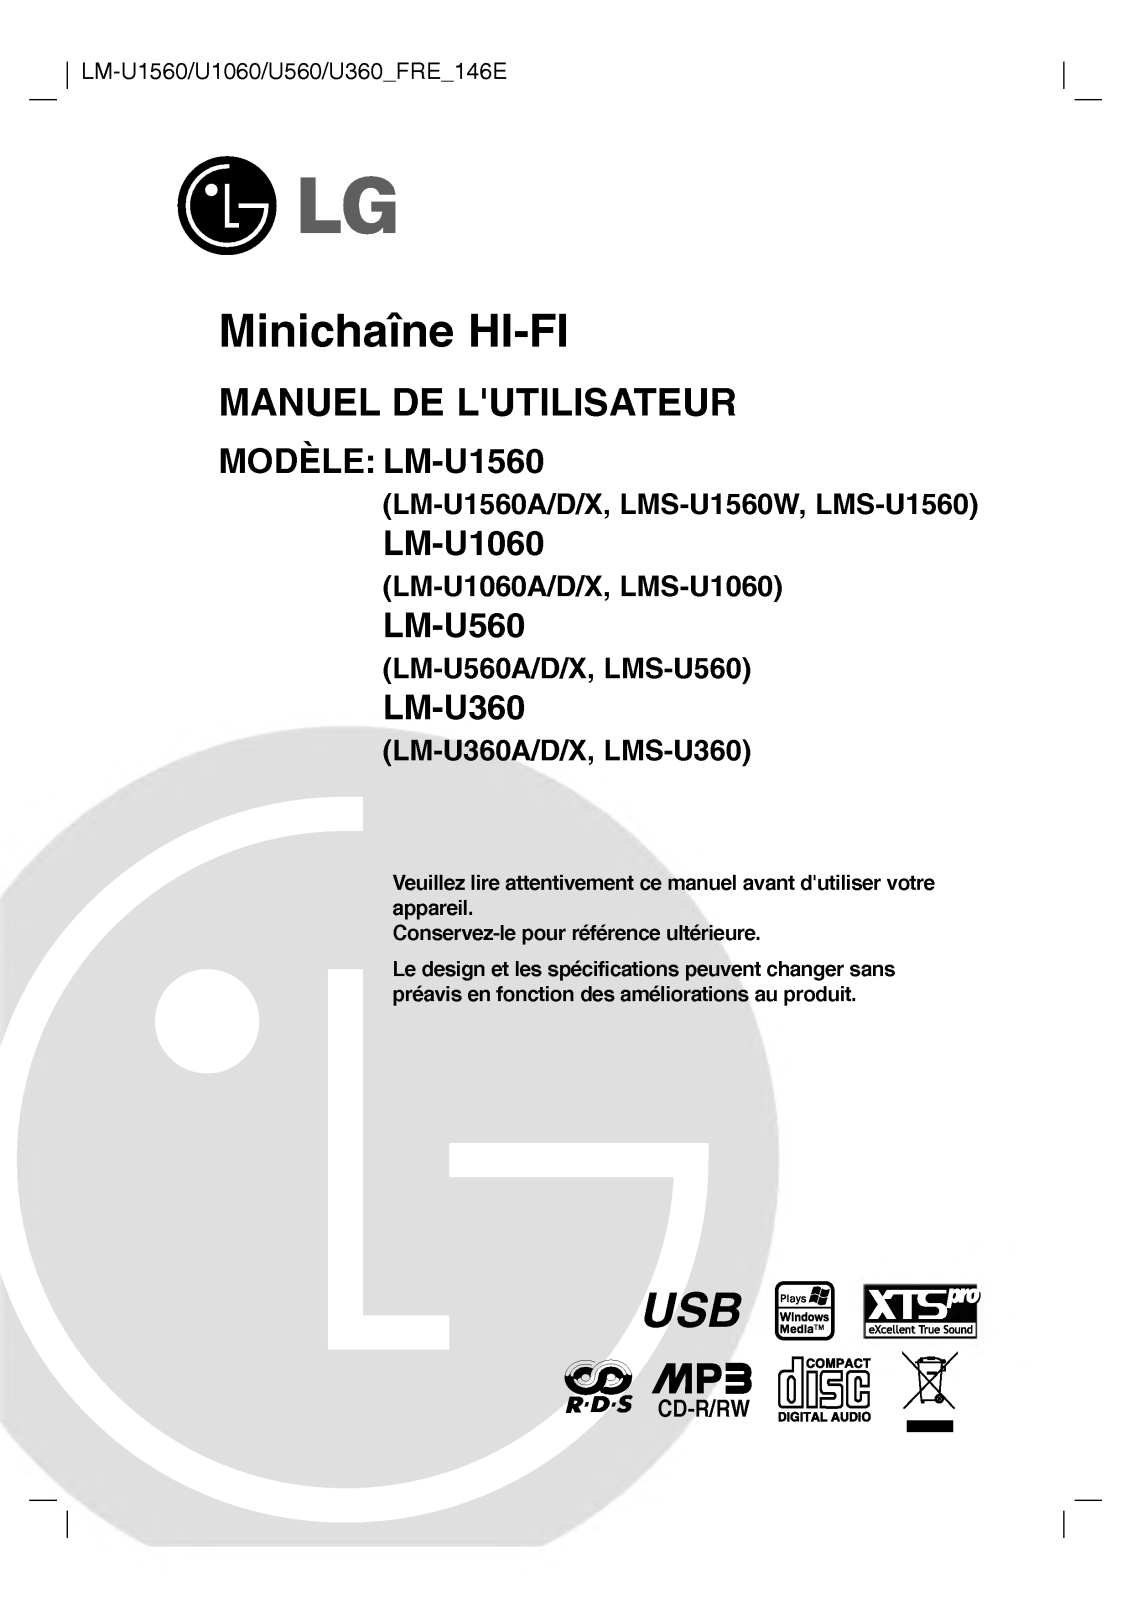 LG LM-U360 User Manual